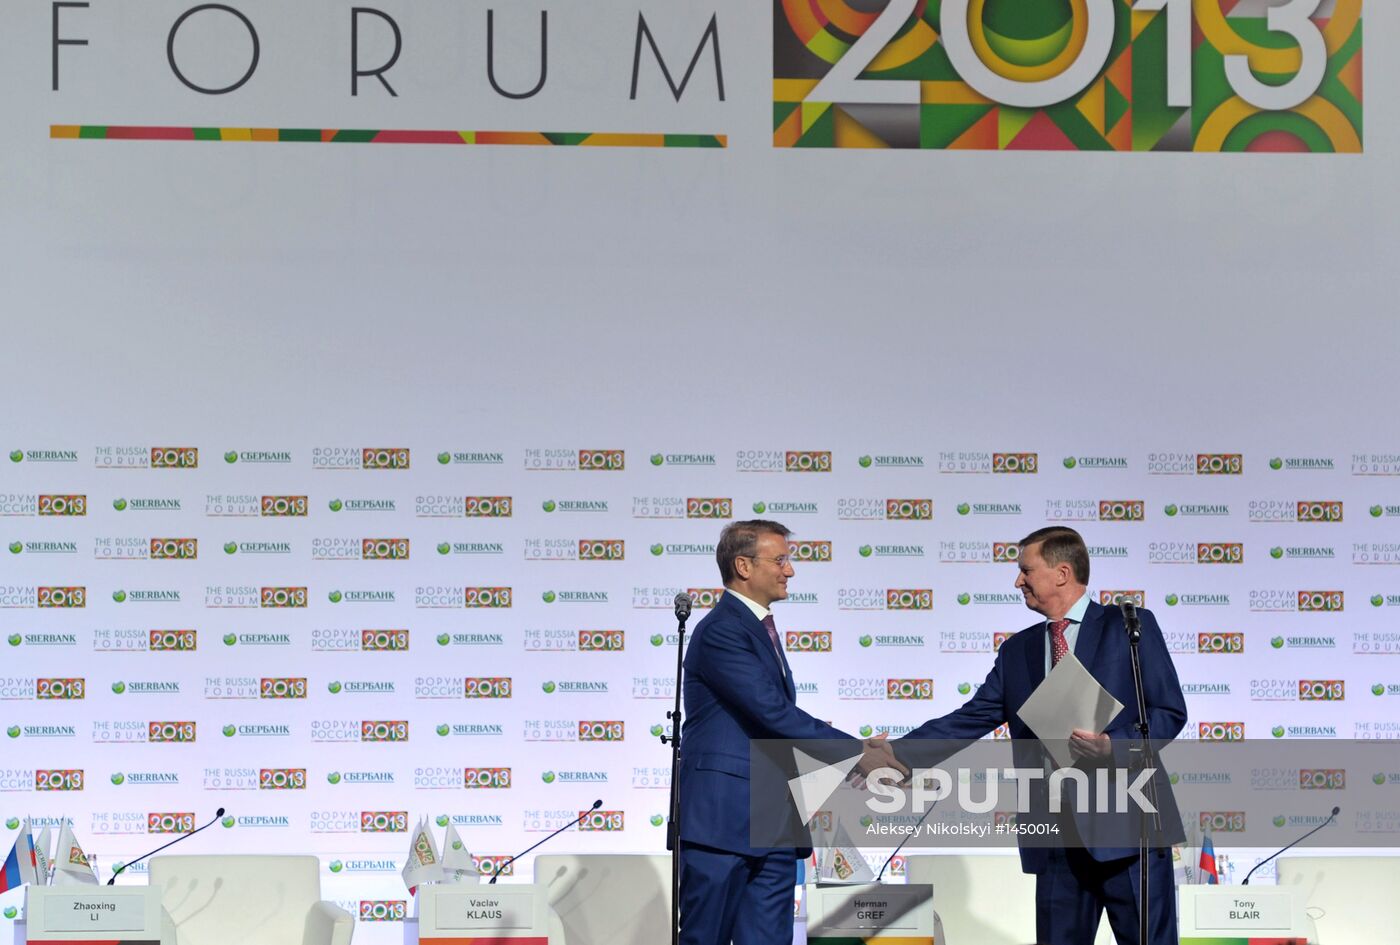 Ivanov, Powell meet at Russia Forum 2013